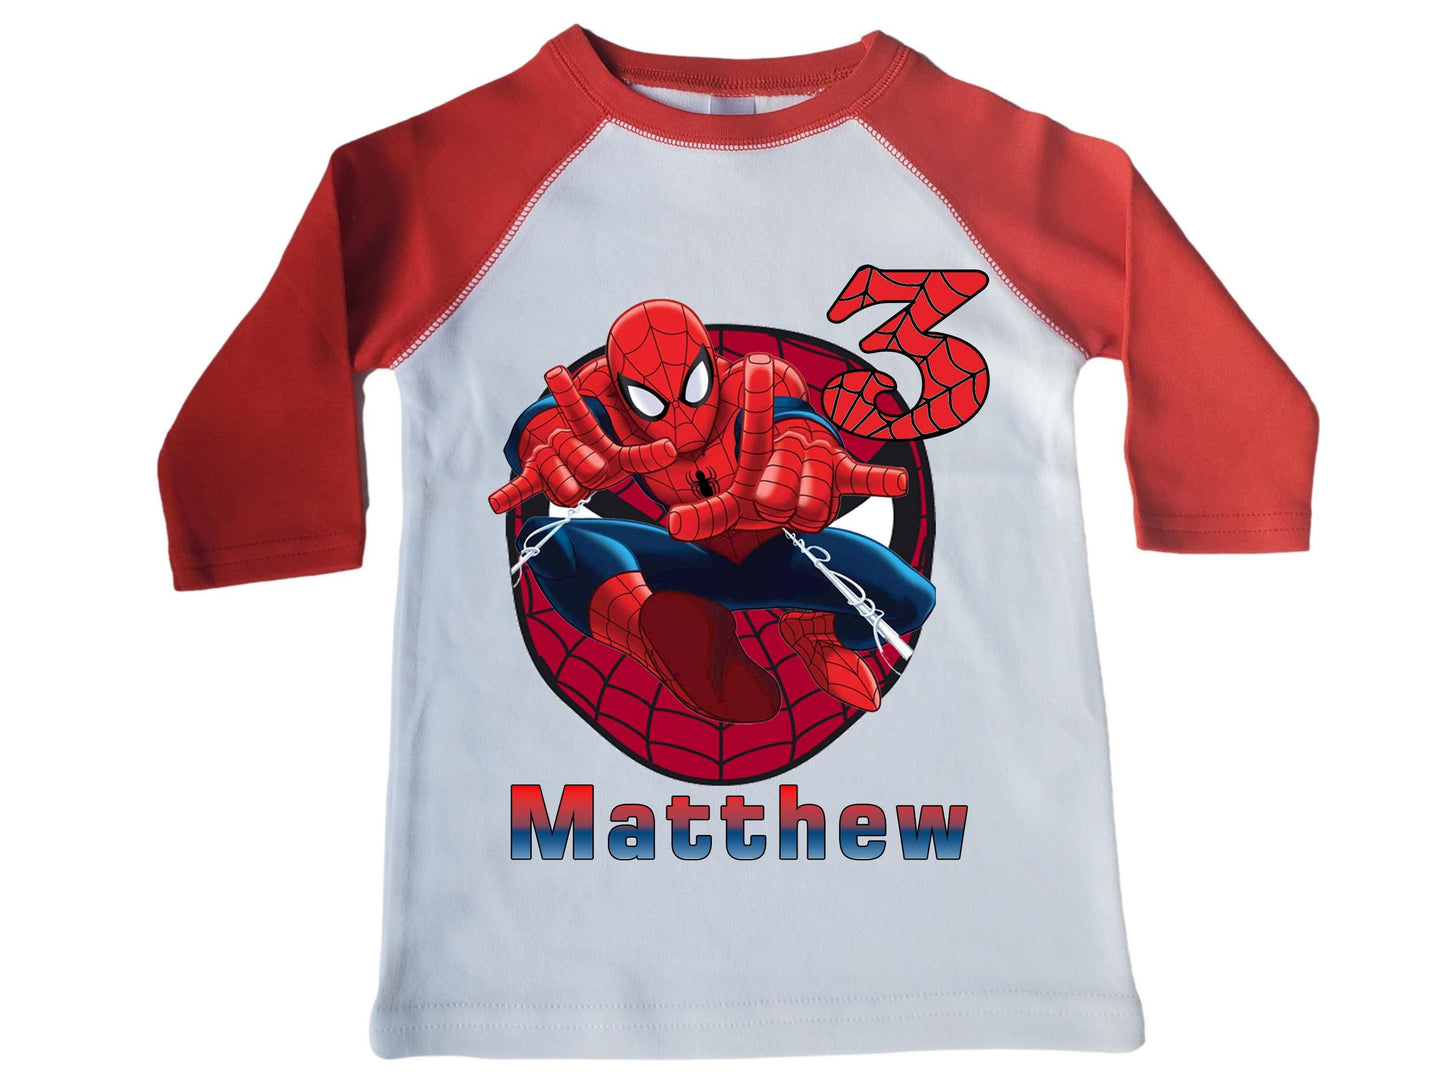 Spiderman birthday Shirt red raglan